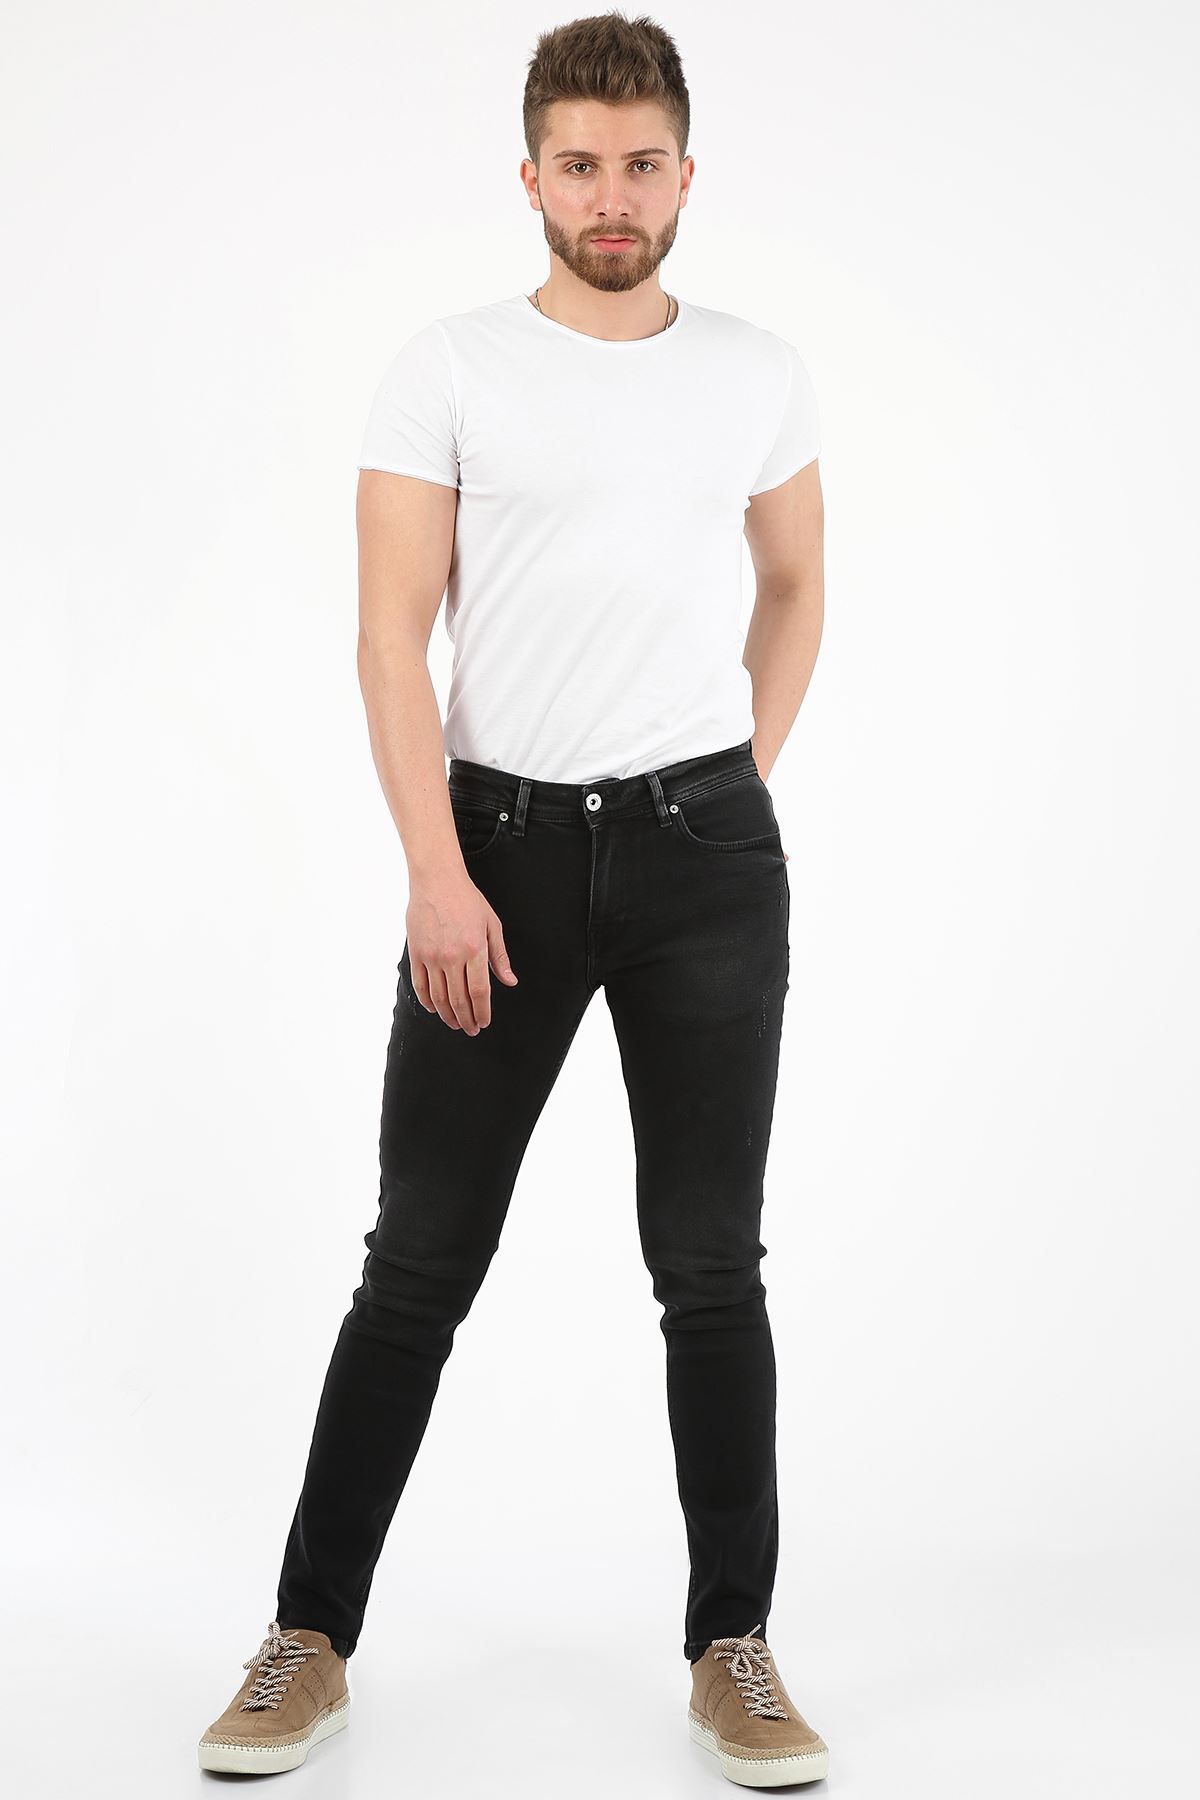 LTC Jeans Siyah Yıpratma Slim Fit Fermuarlı Erkek Jeans Pantolon-jonas